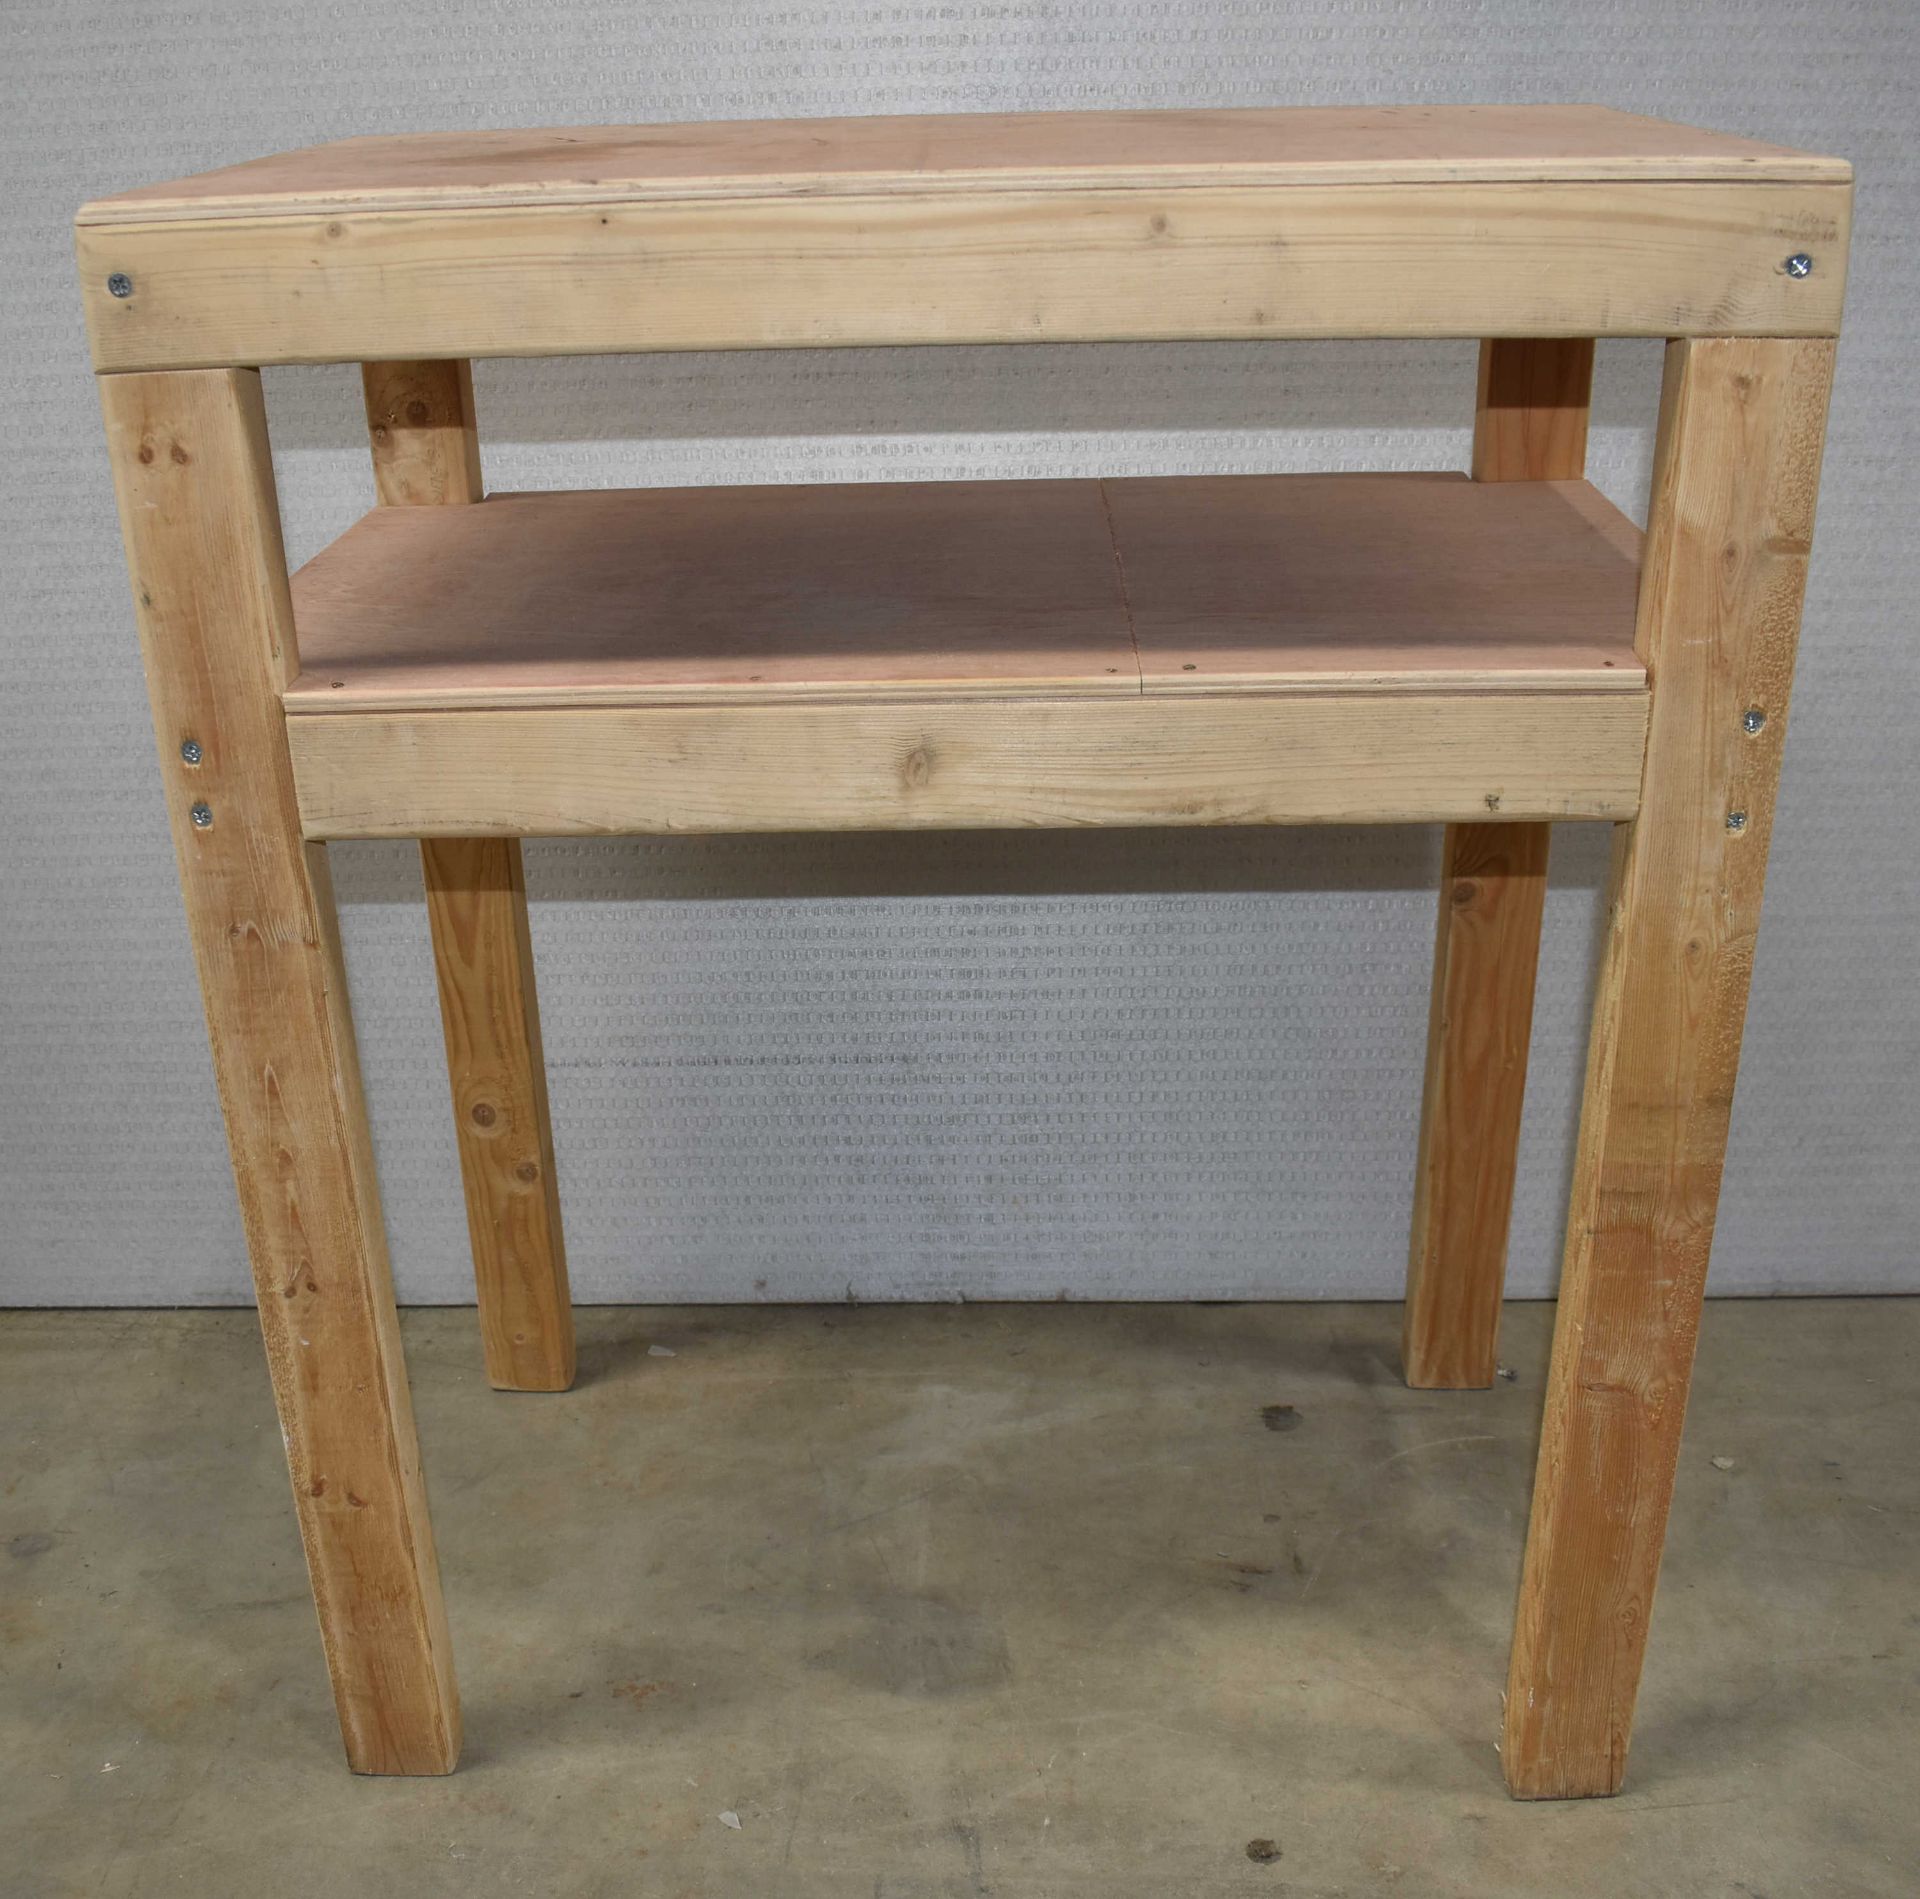 1 x Small Wooden Workbench - 75(w) x 42(d) x 89(h) cm - Ref: K286 - CL905 - Location: Altrincham - Image 9 of 10